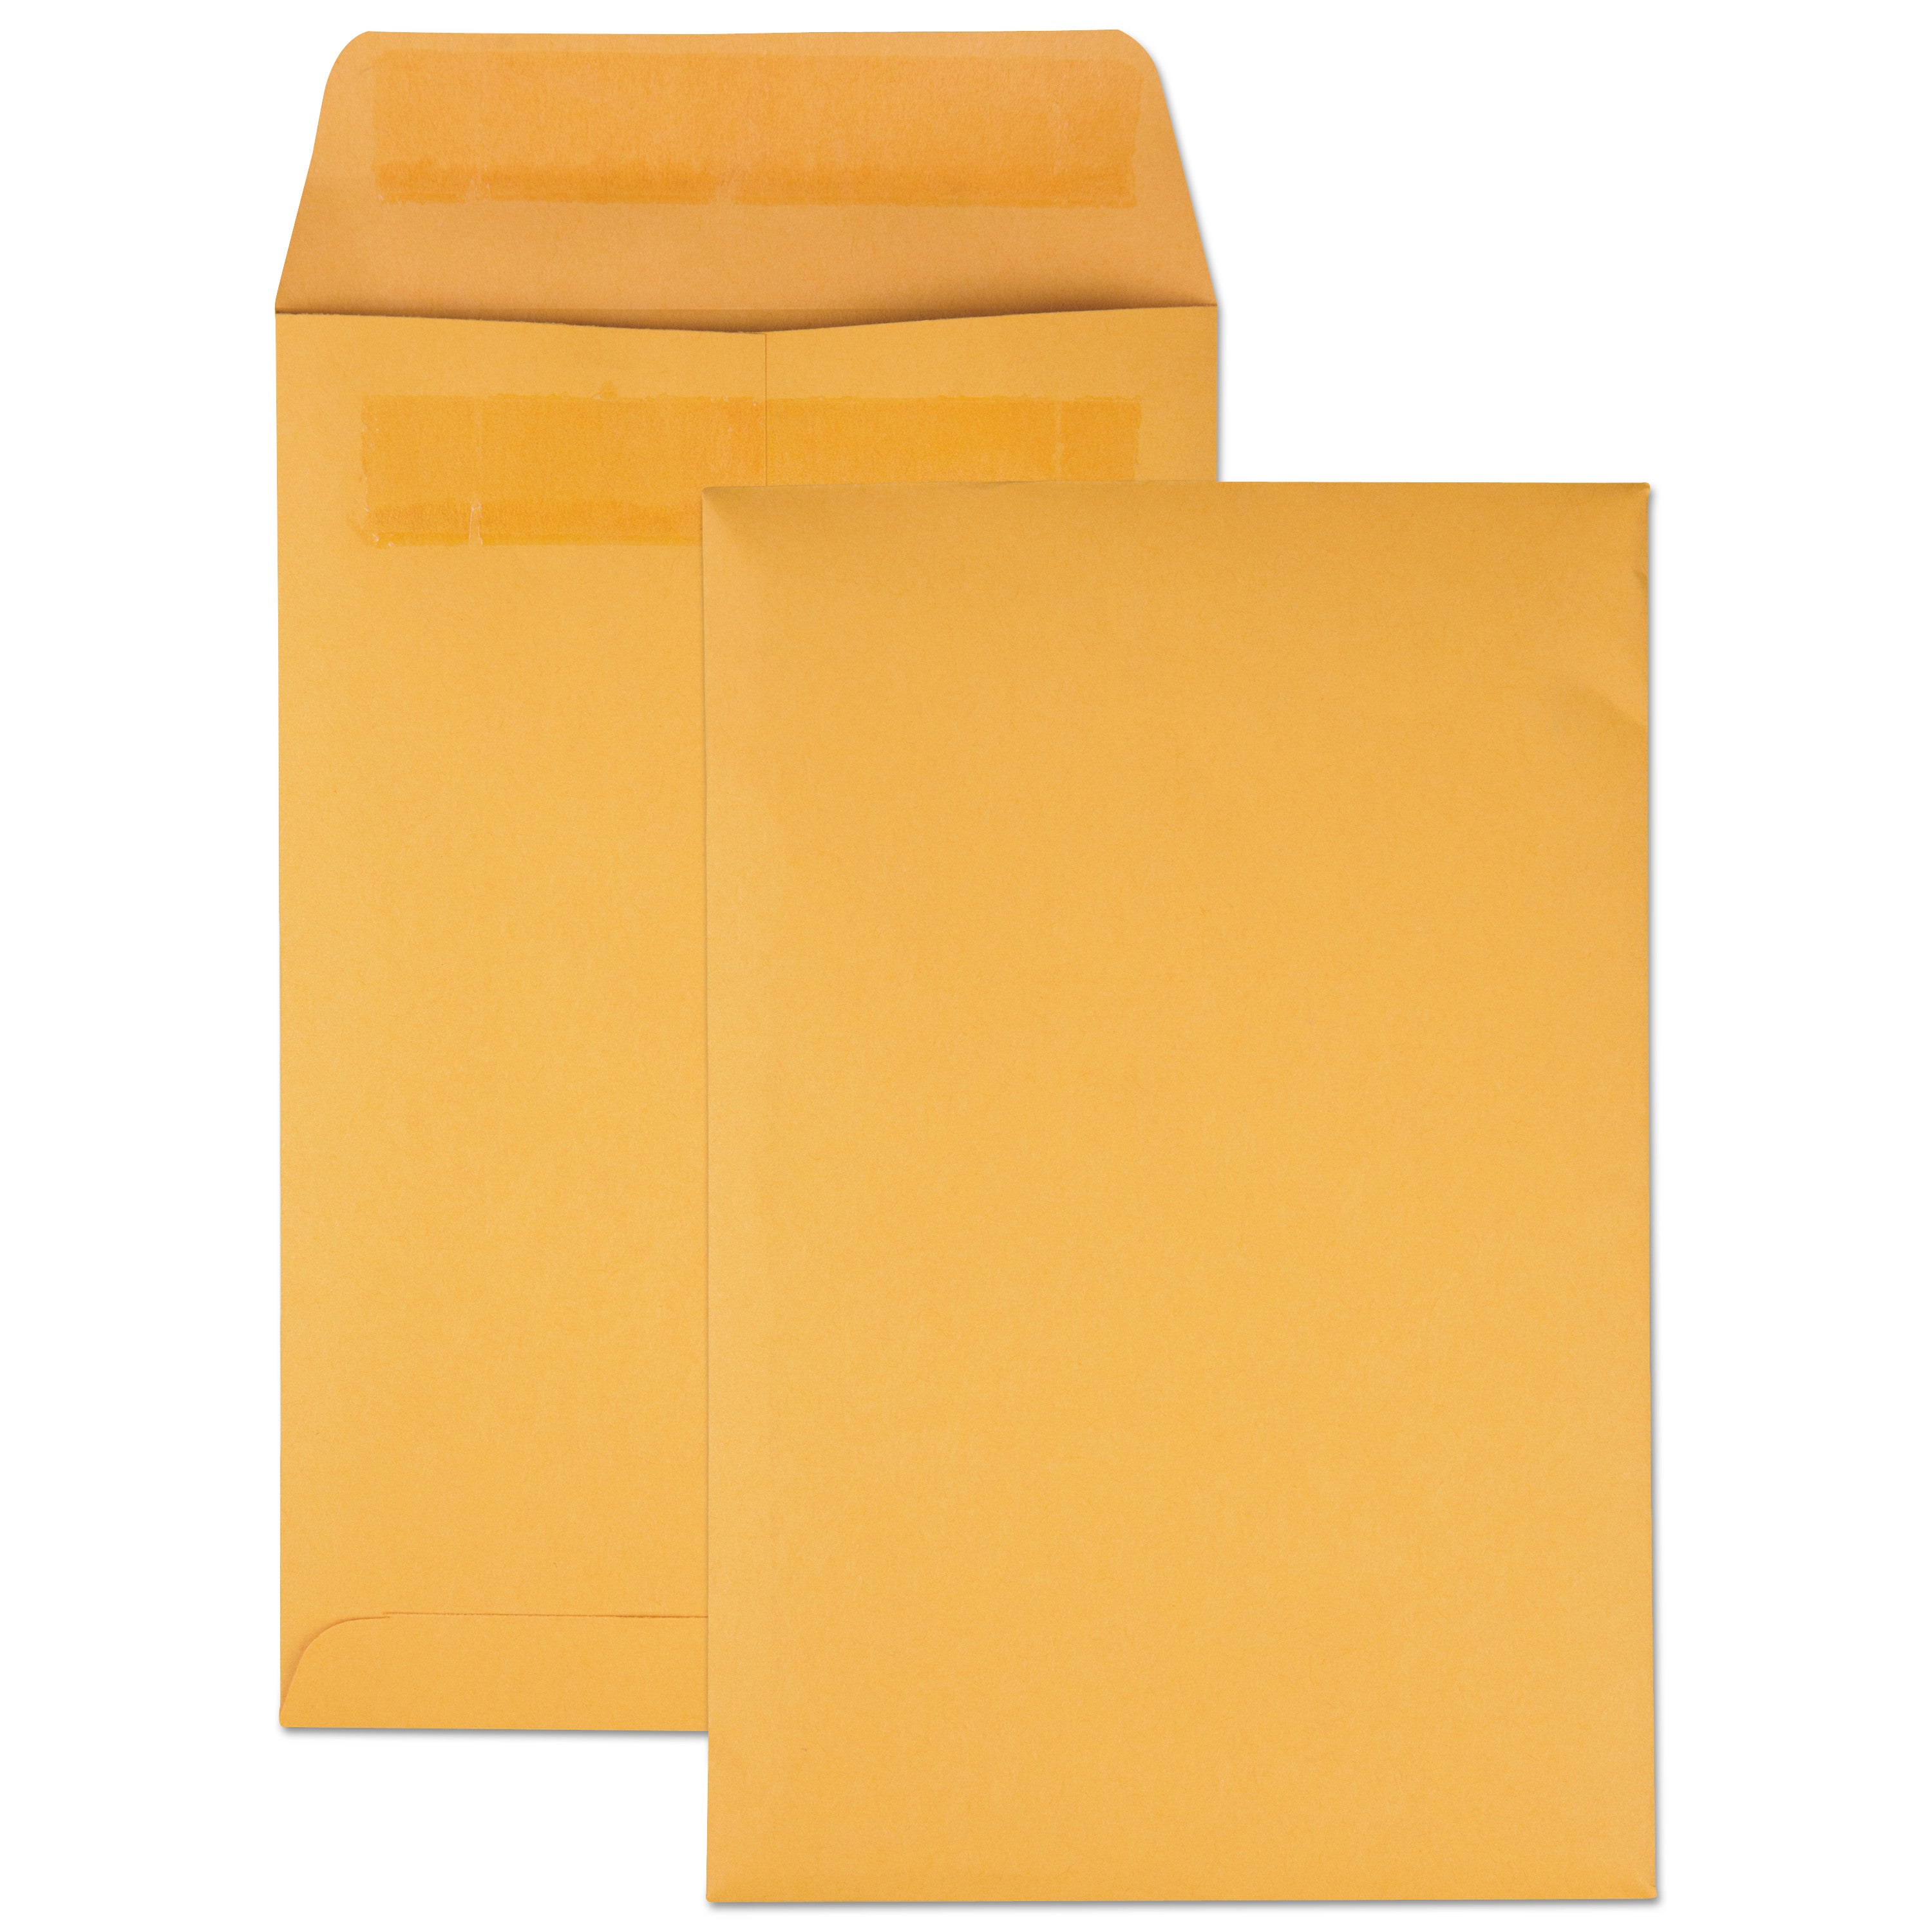 Redi-Seal Catalog Envelope, #1, Cheese Blade Flap, Redi-Seal Adhesive Closure, 6 x 9, Brown Kraft, 100/Box - 